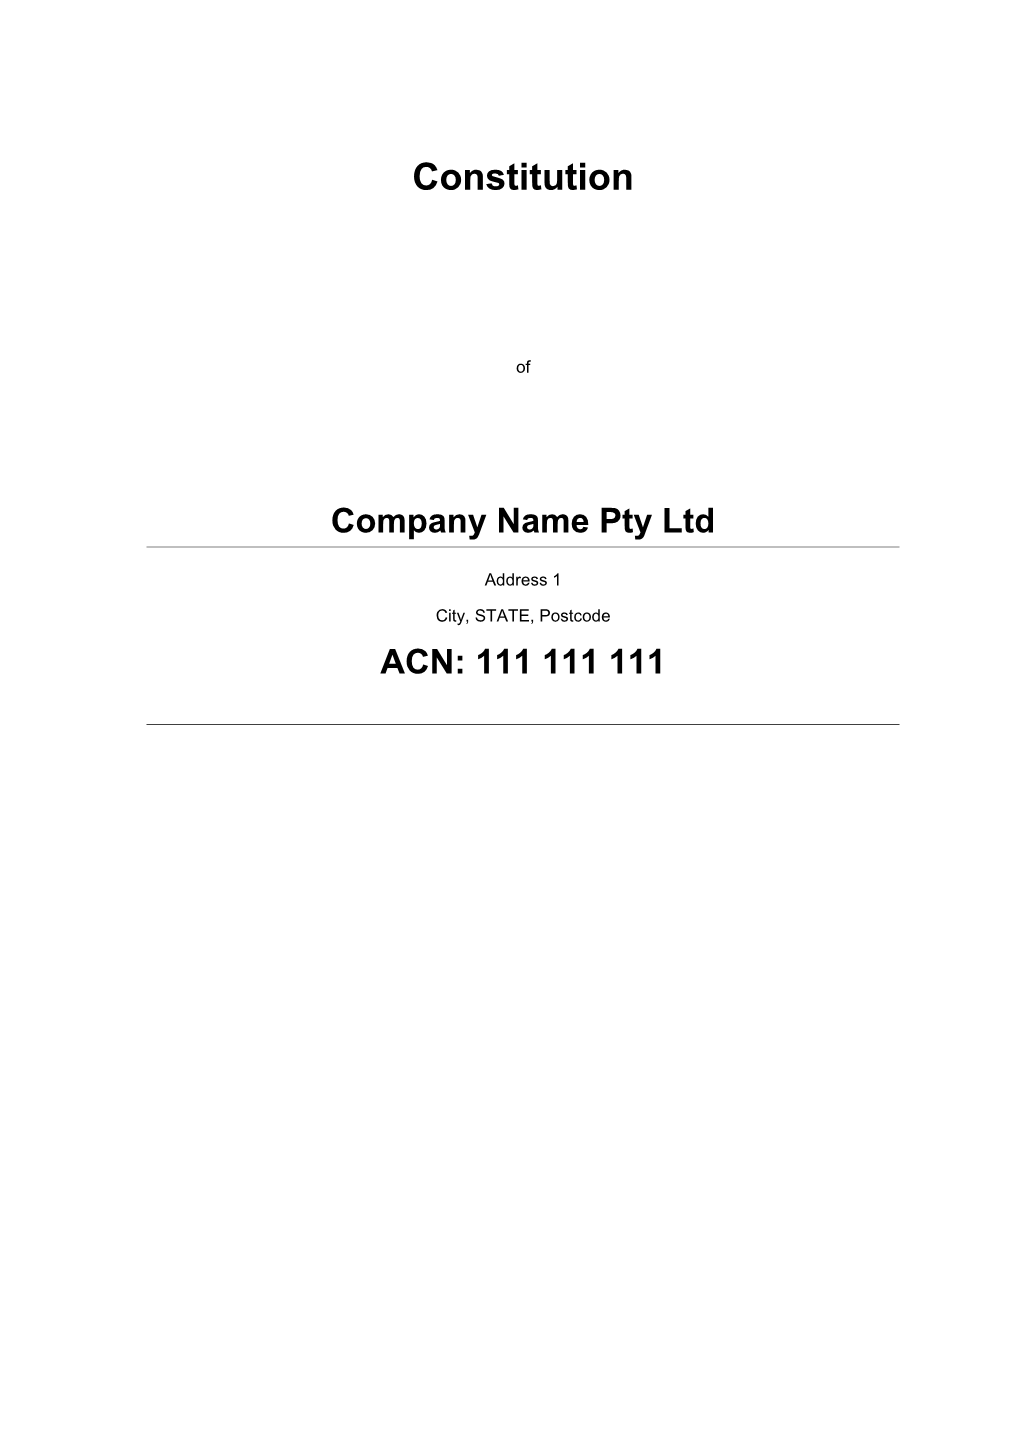 Company Name Pty Ltd